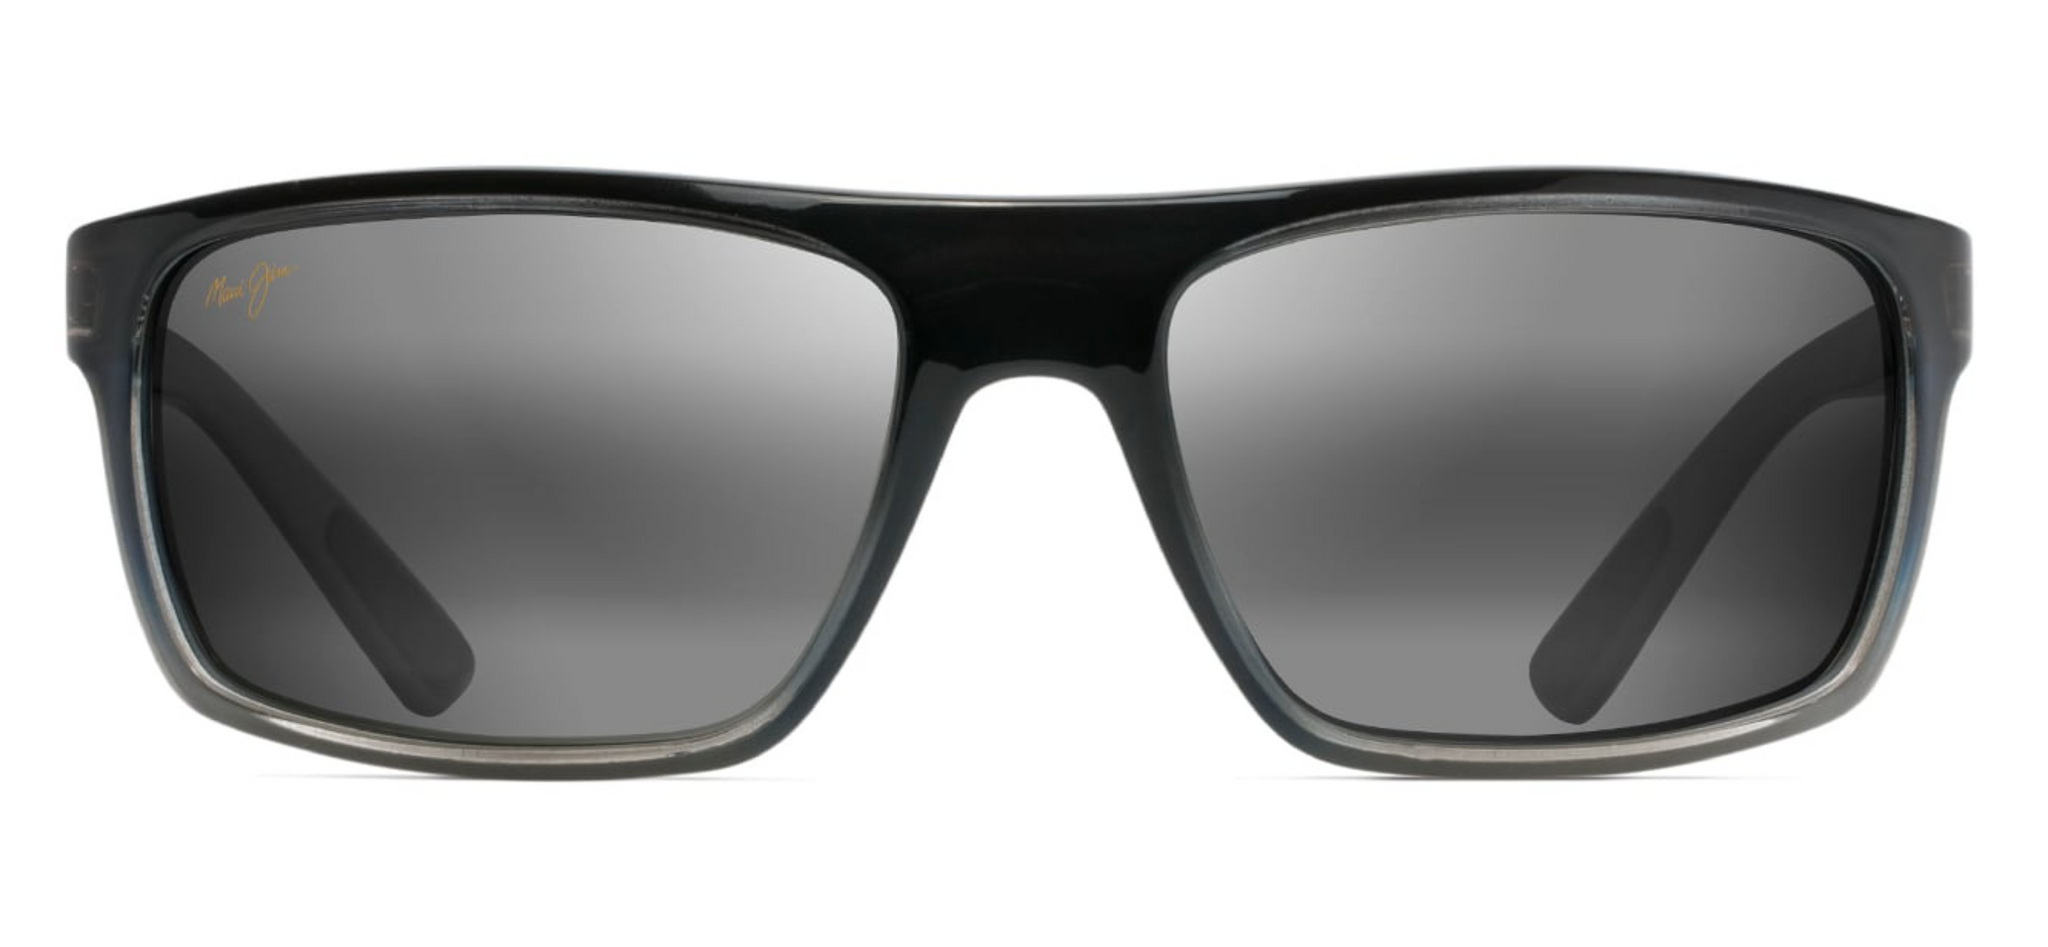 Maui Jim Byron Bay 746 Sunglasses Marlin with Neutral Grey Lenses ...